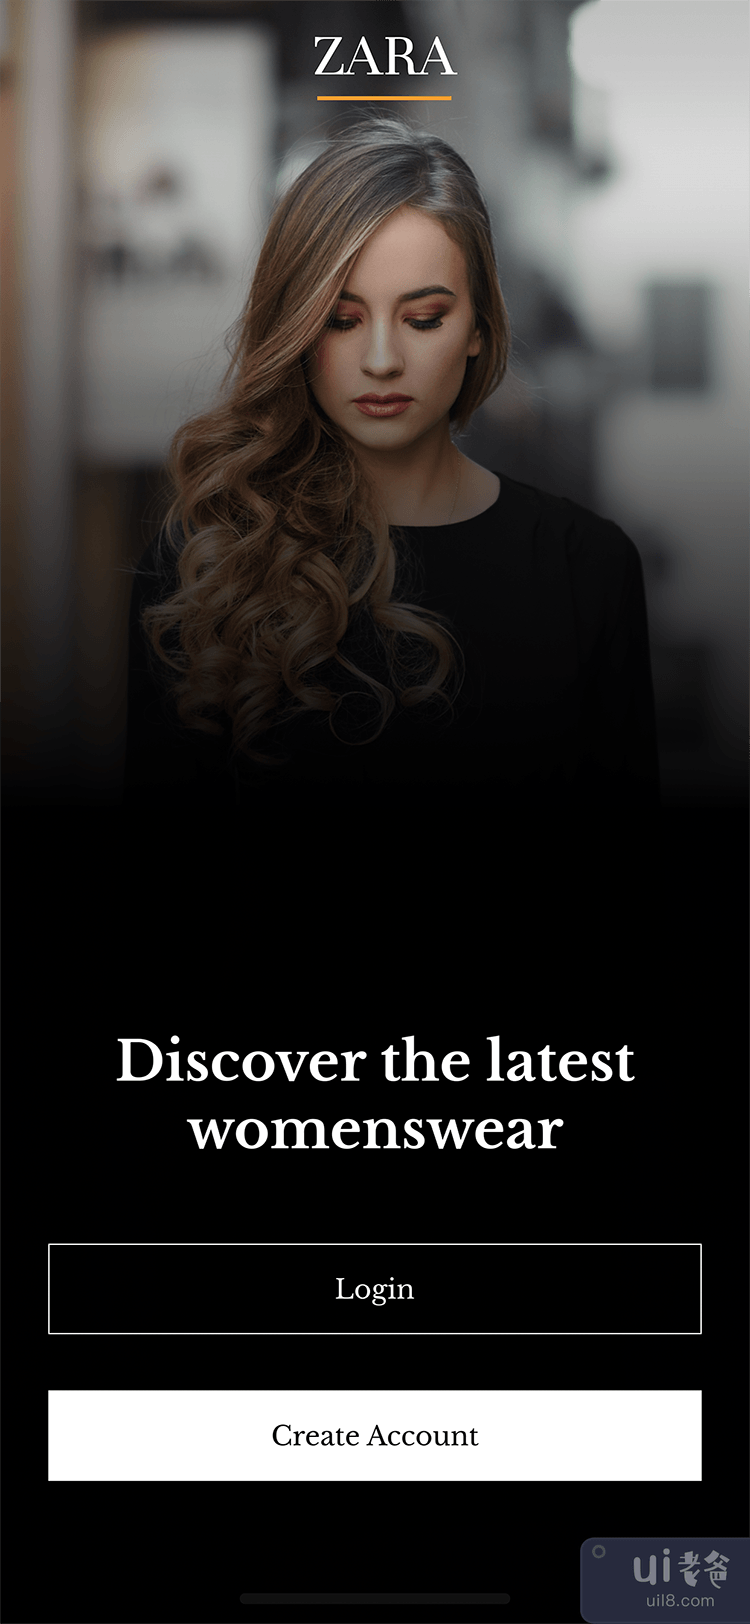 Zara 时尚 - iOS 应用(Zara fashion - iOS App)插图